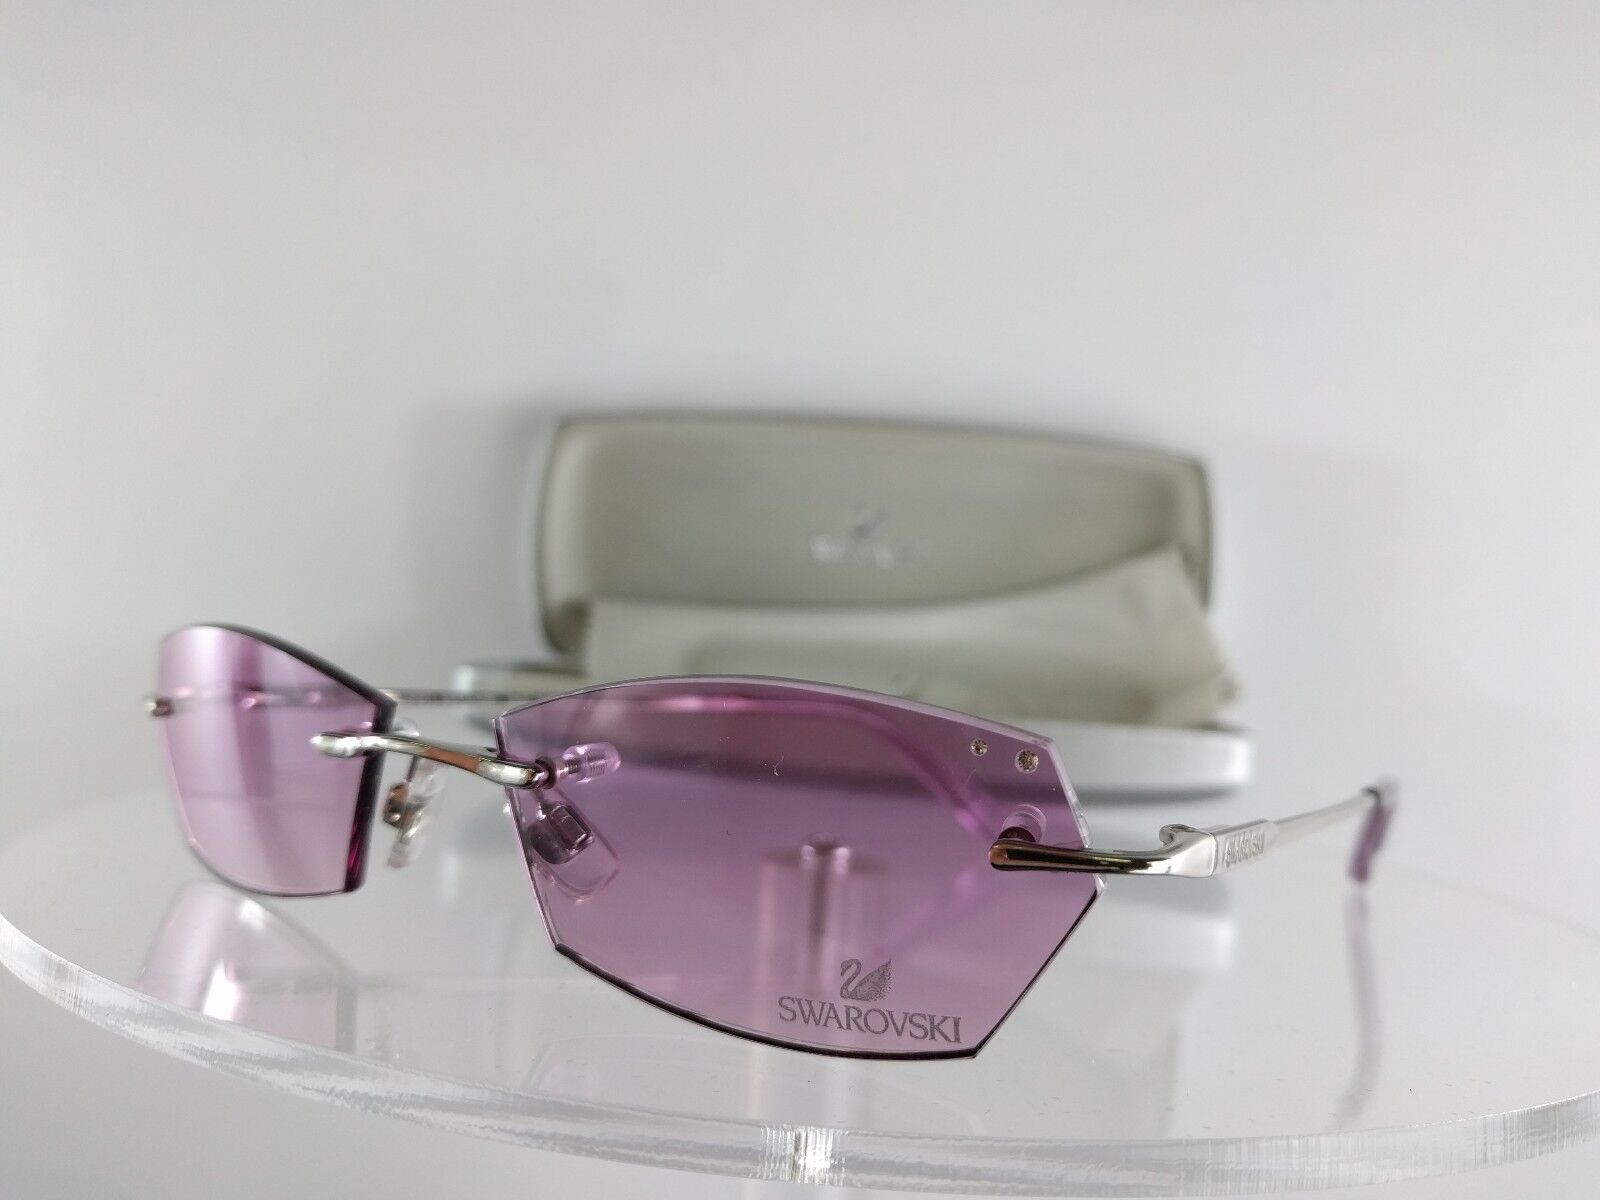 Brand New Authentic Swarovski Sunglasses AIR SW 5015 16A Violet Frame